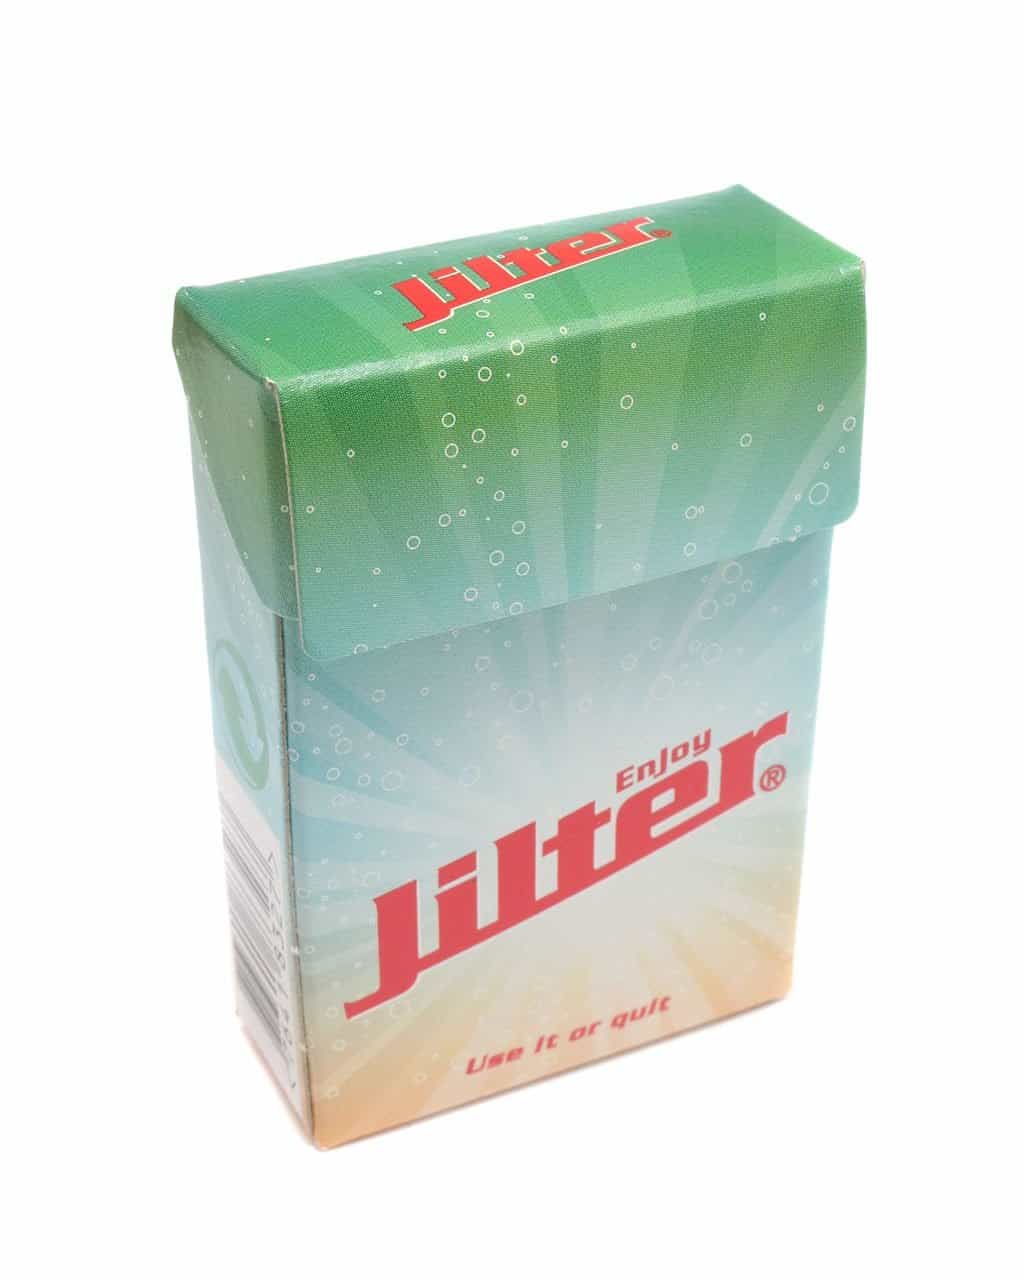 Filter &amp; Activated Carbon JILTER Cigarette Filter | 42 pieces